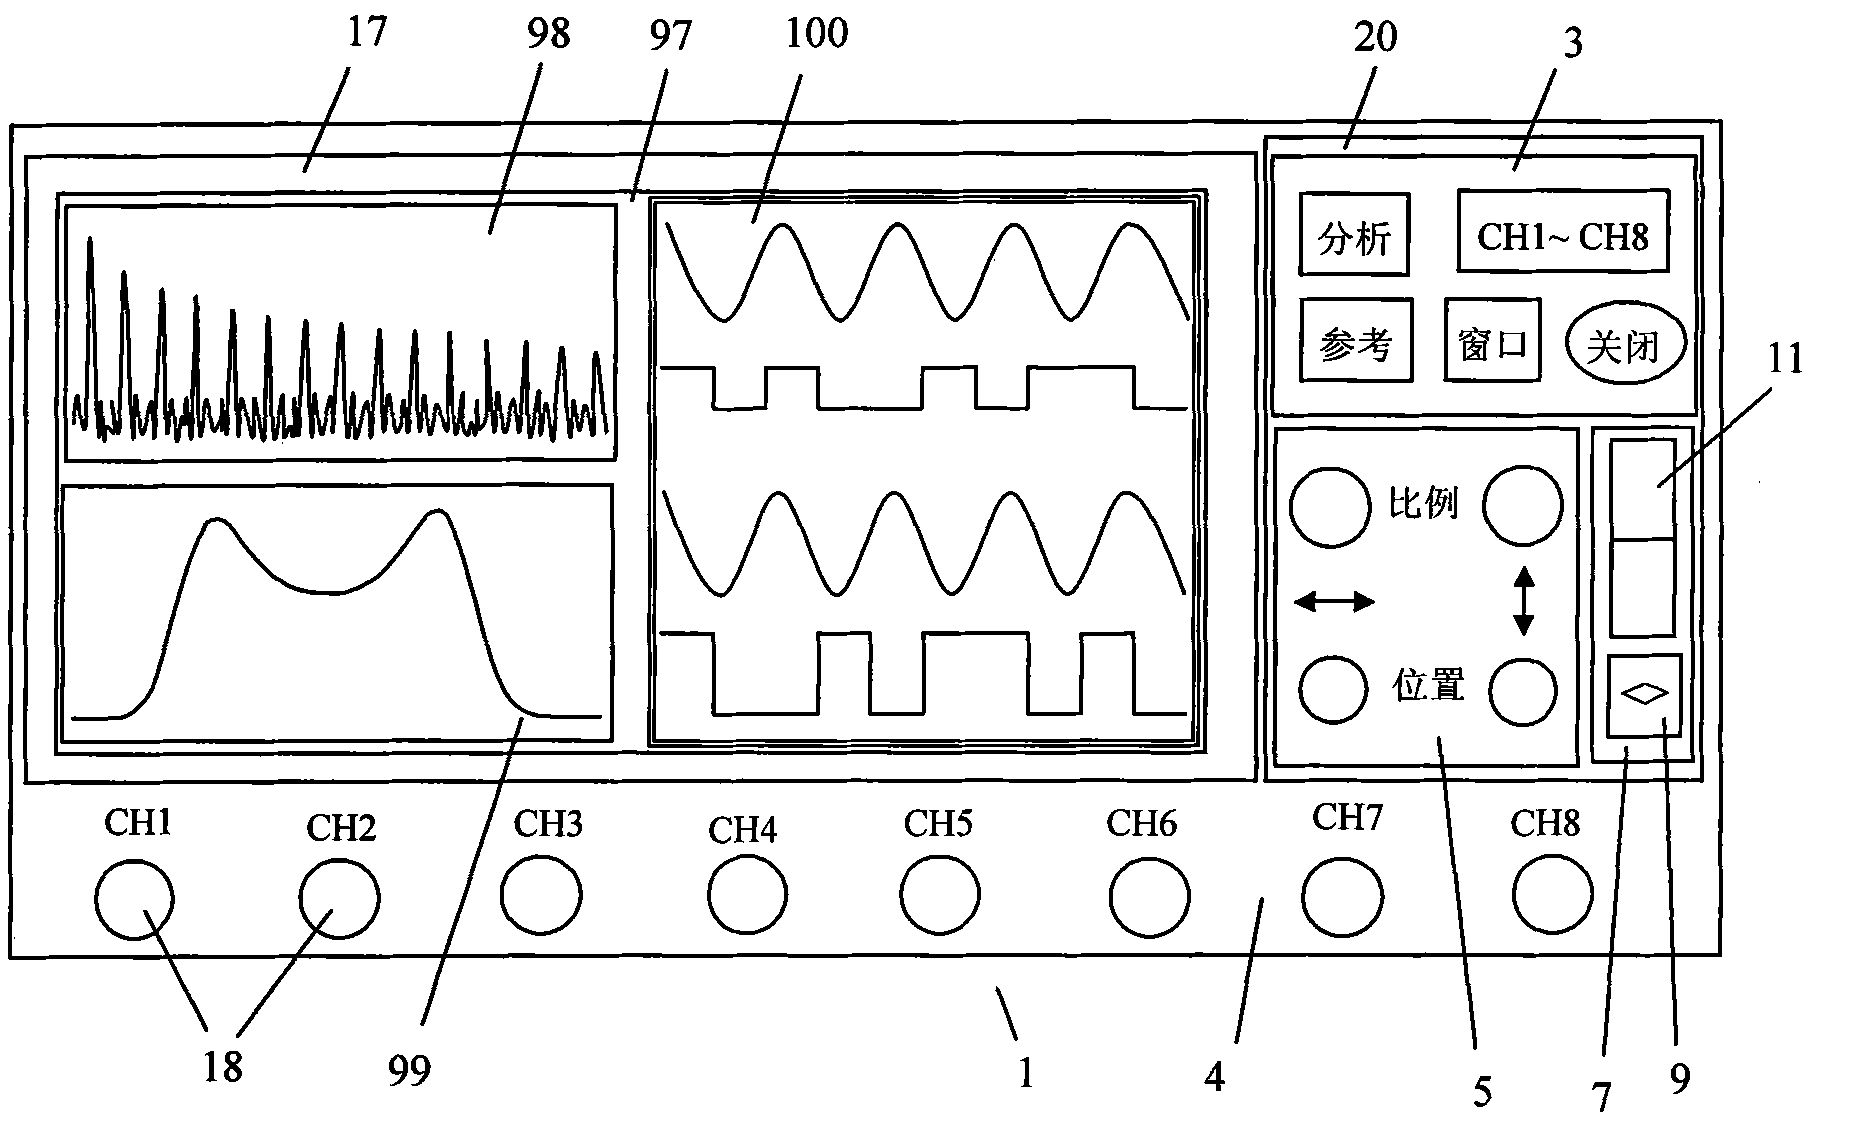 Digital oscilloscope and method for controlling display waveform